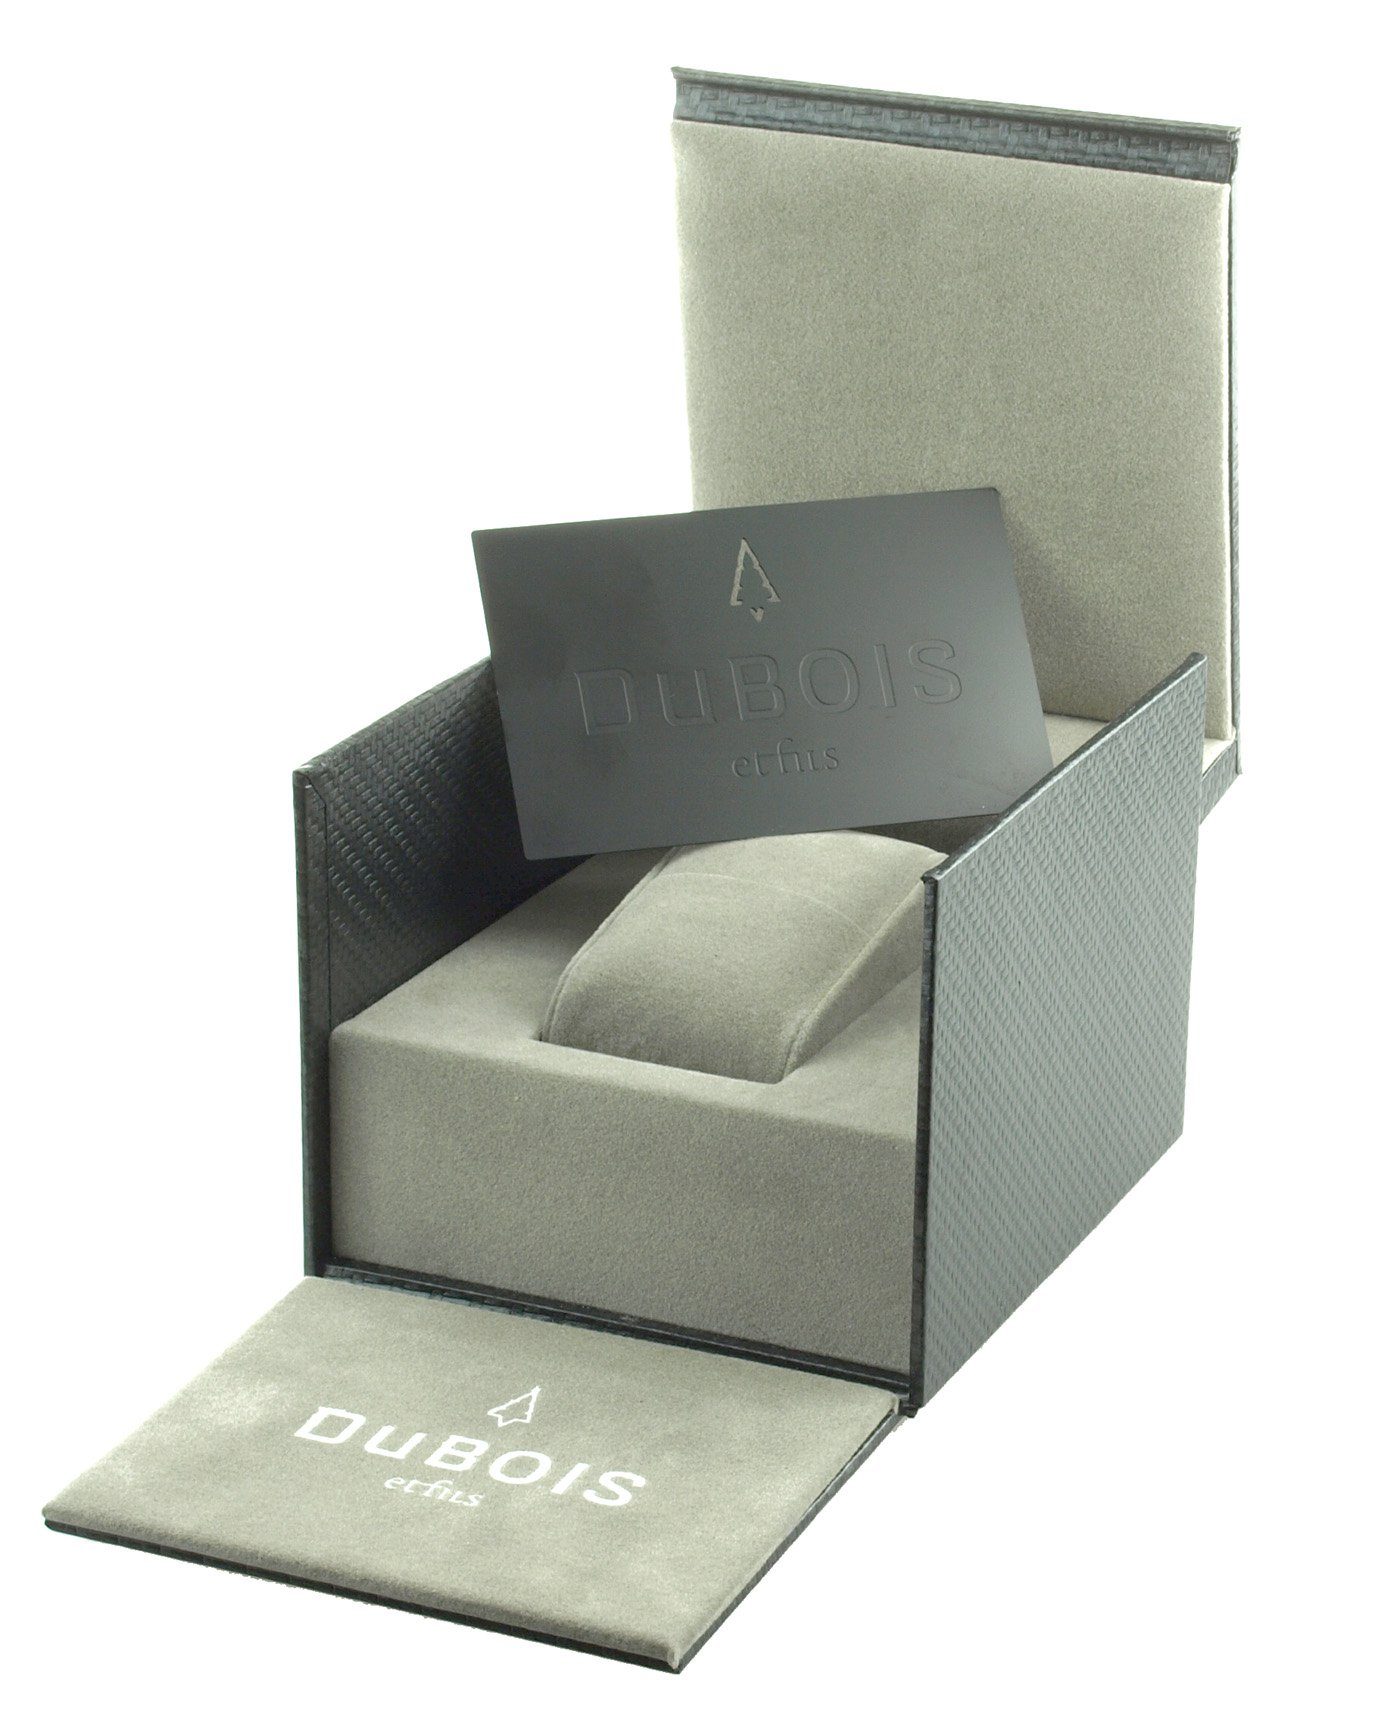 Swiss Herren individuelle 1 fils - et DuBois Made fils 99 Limited et Chronograph Limitiert, DuBois Nummer Uhr DBF001-07 Edition Stück, Automatikuhr